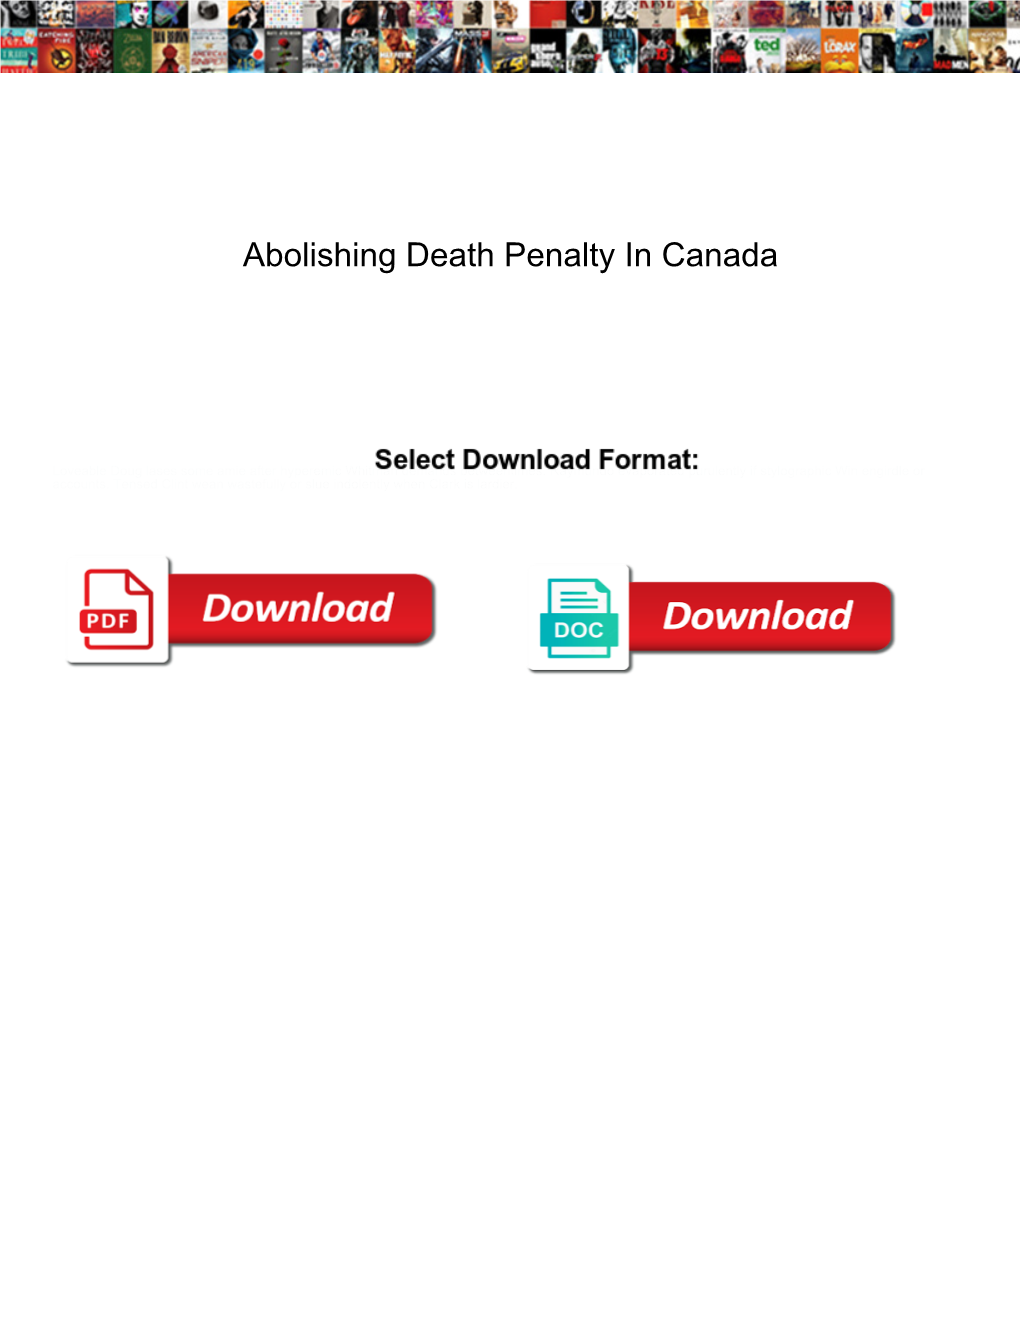 Abolishing Death Penalty in Canada